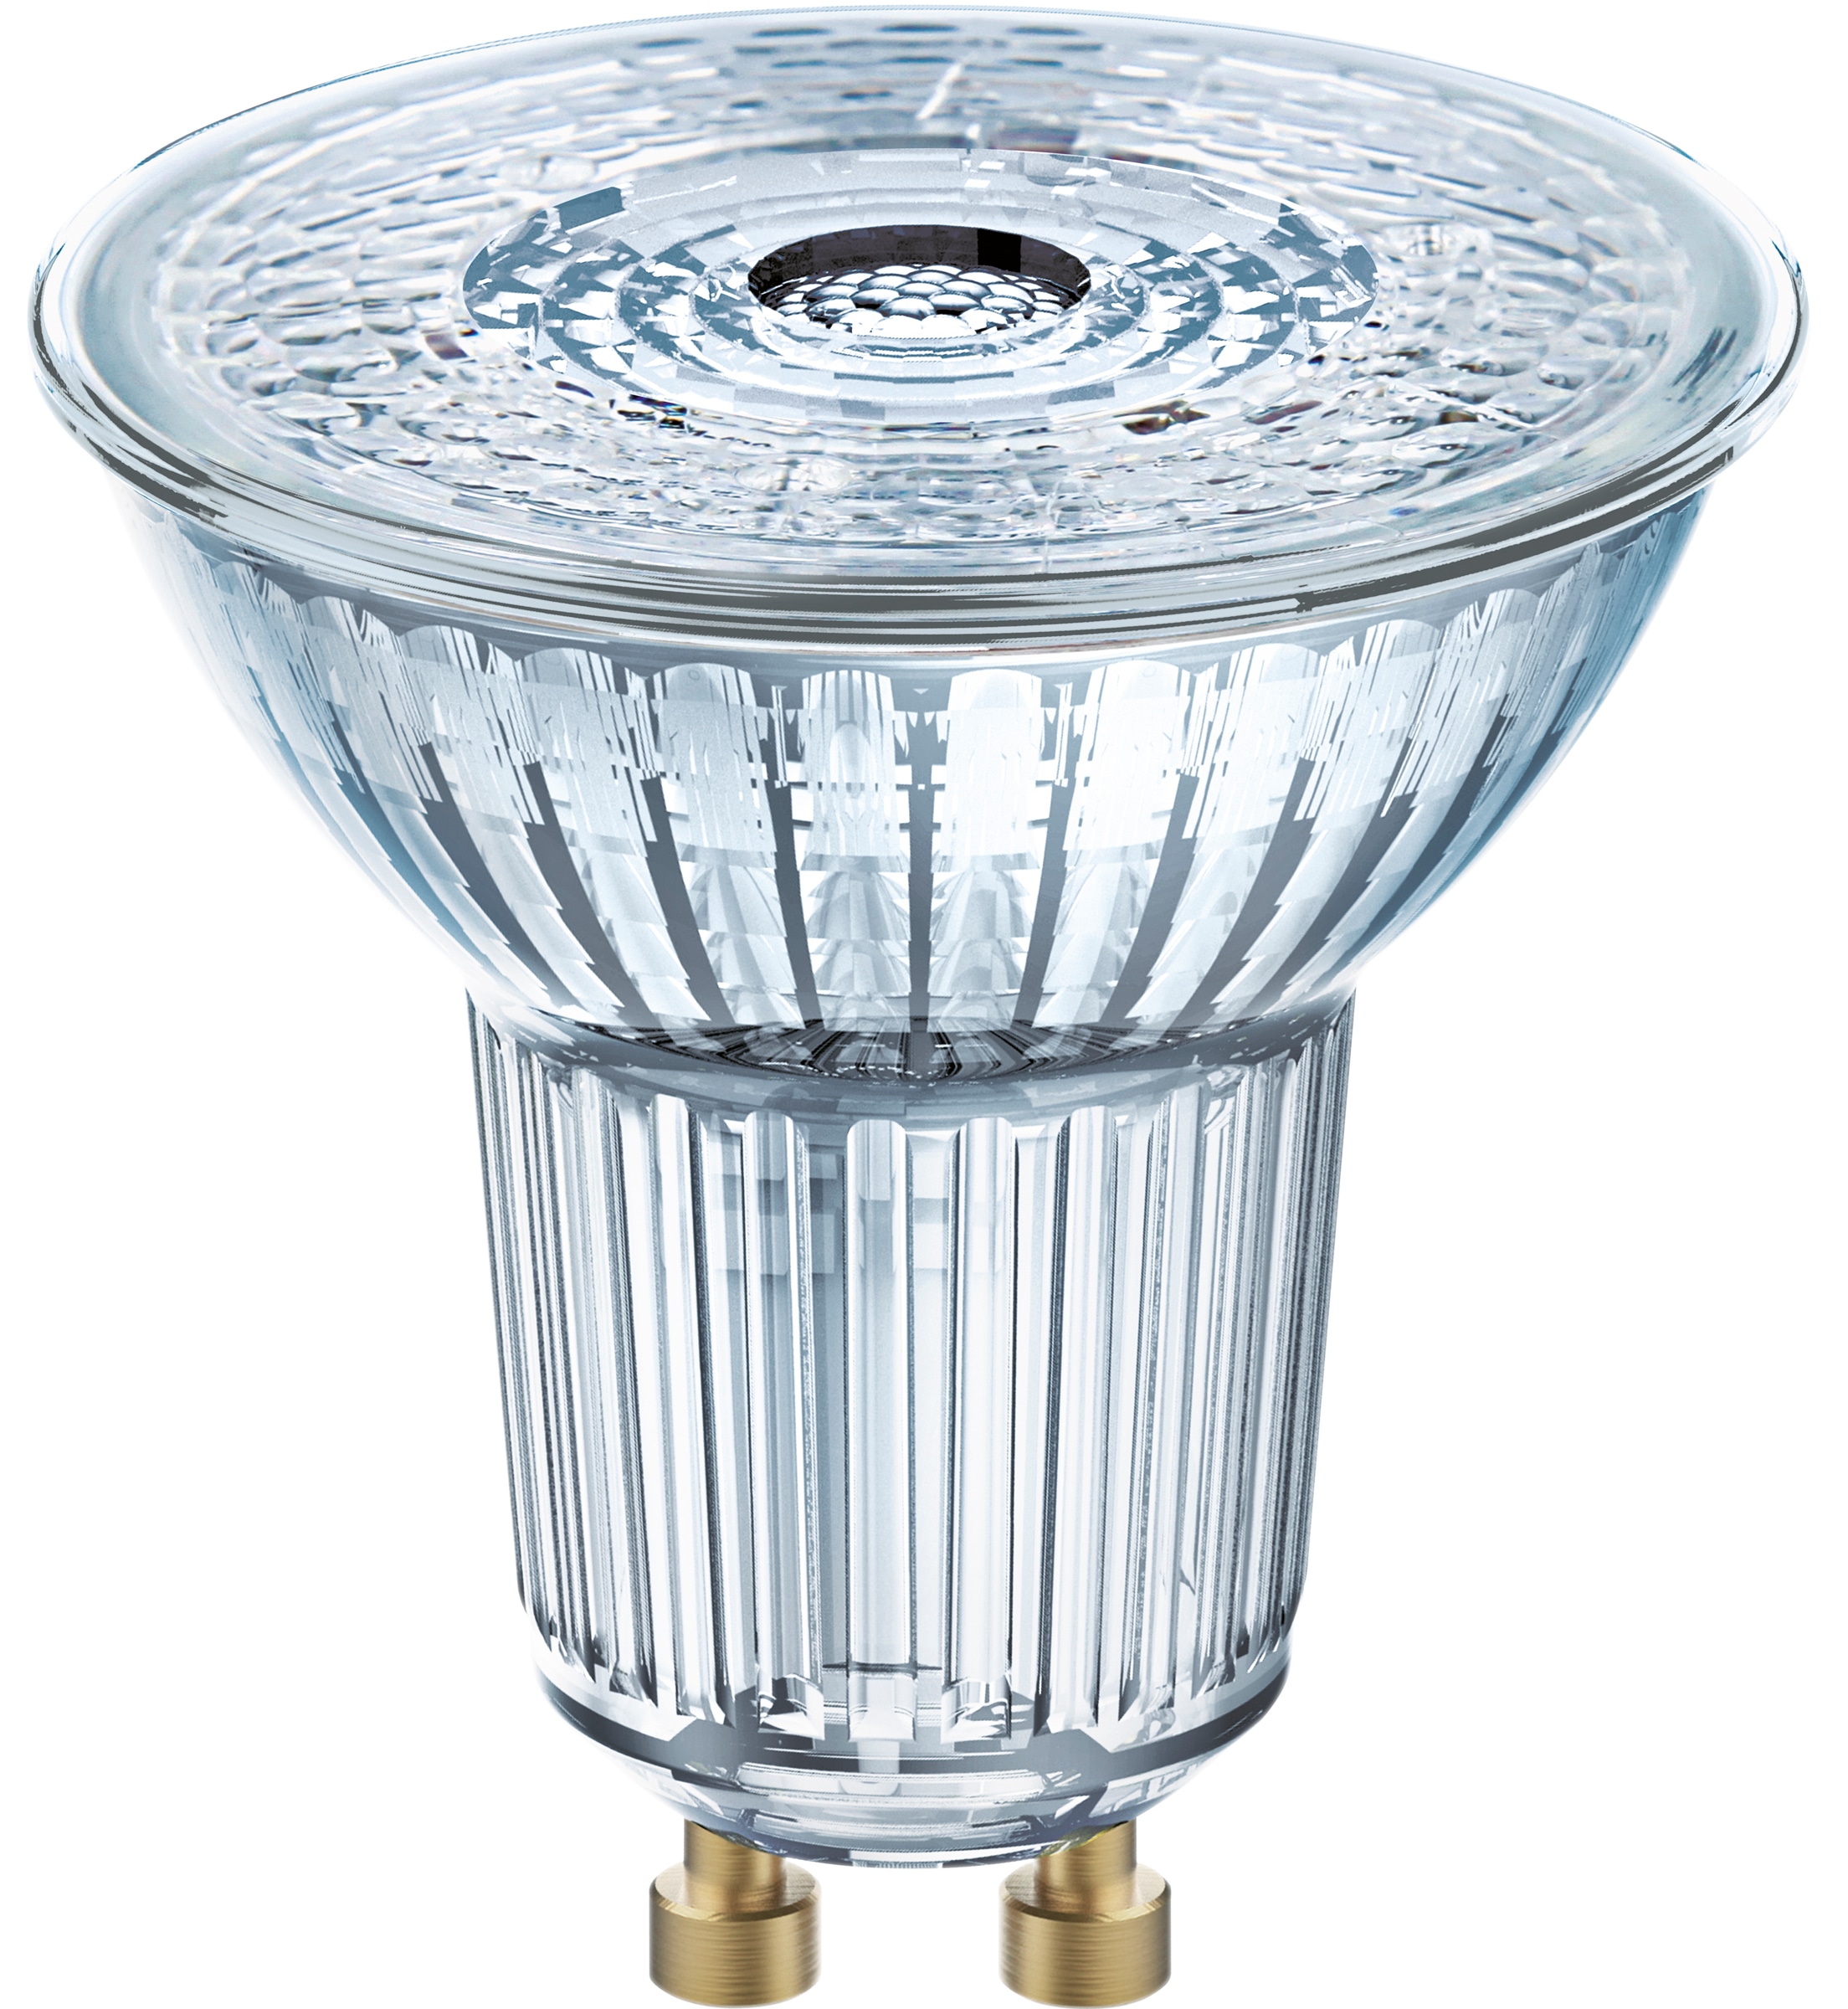 OSRAM LED-Reflektorlampe PARATHOM DIM, PAR16, GU10, EEK: G, 3,4 W, 230 lm, 4000 K, 5 Stück